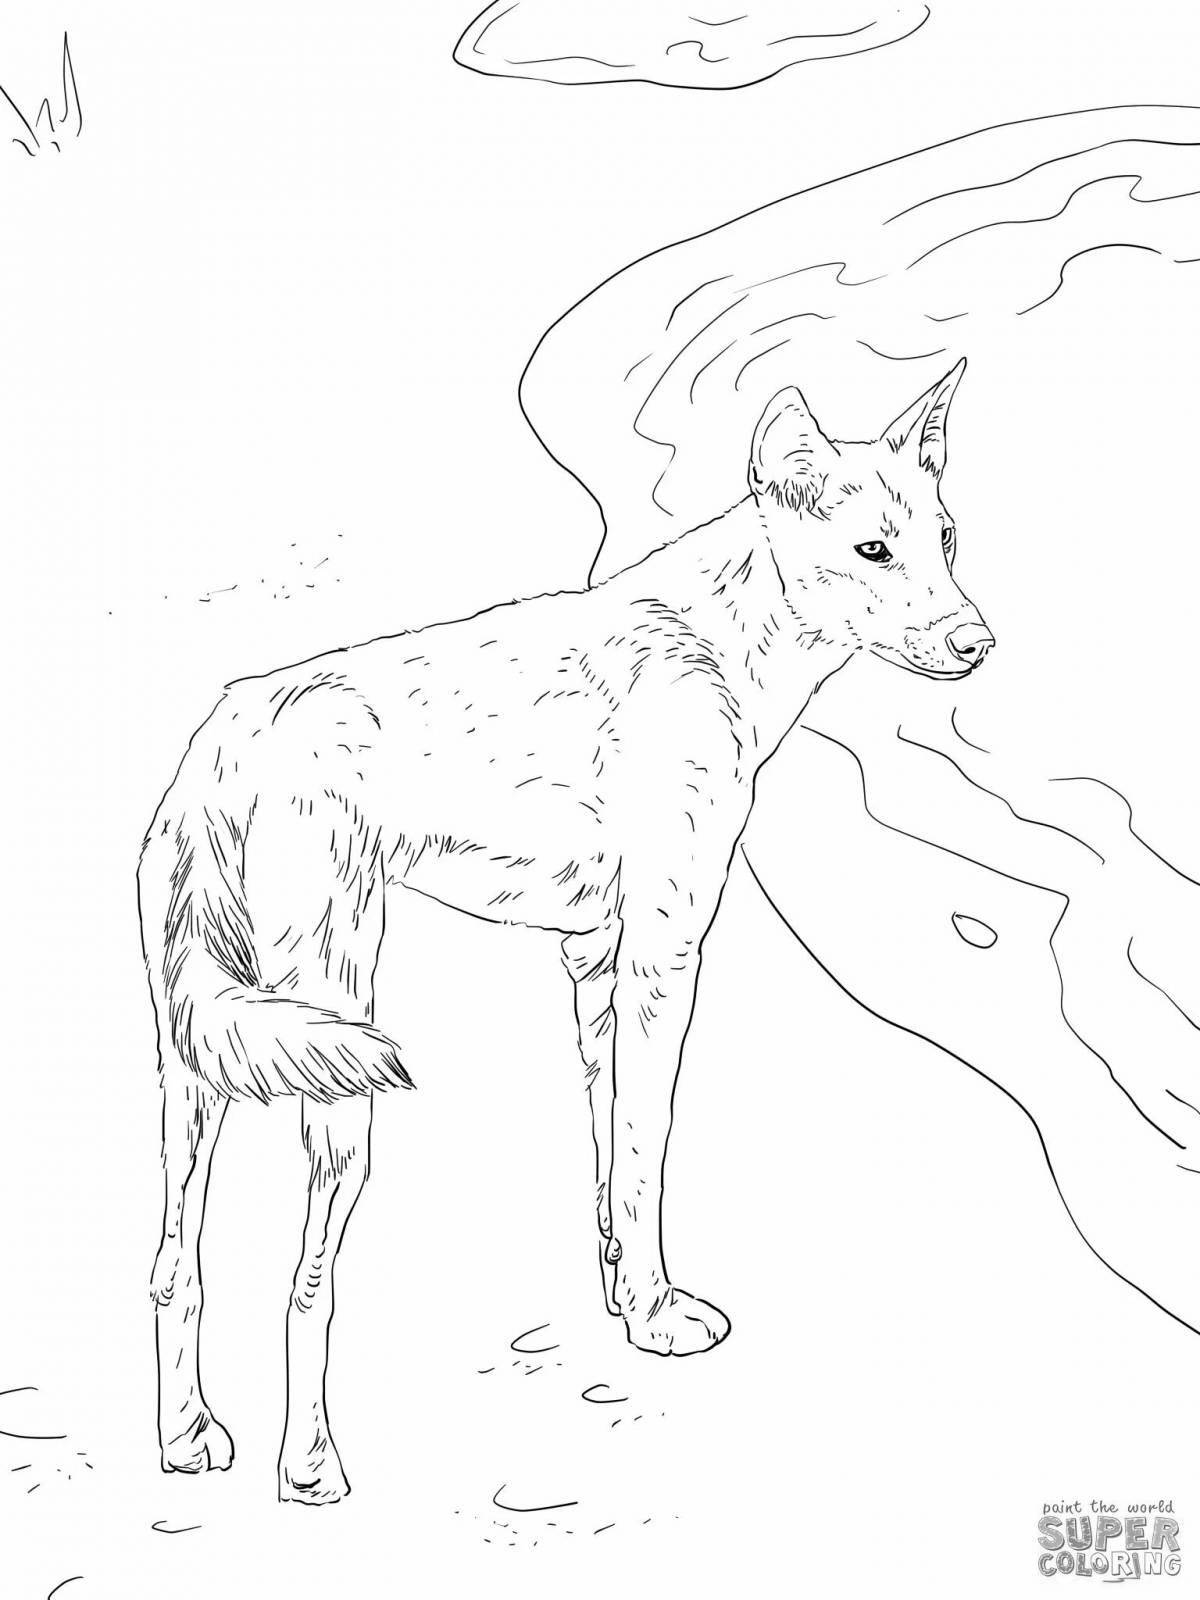 Coloring page playful dingo dog